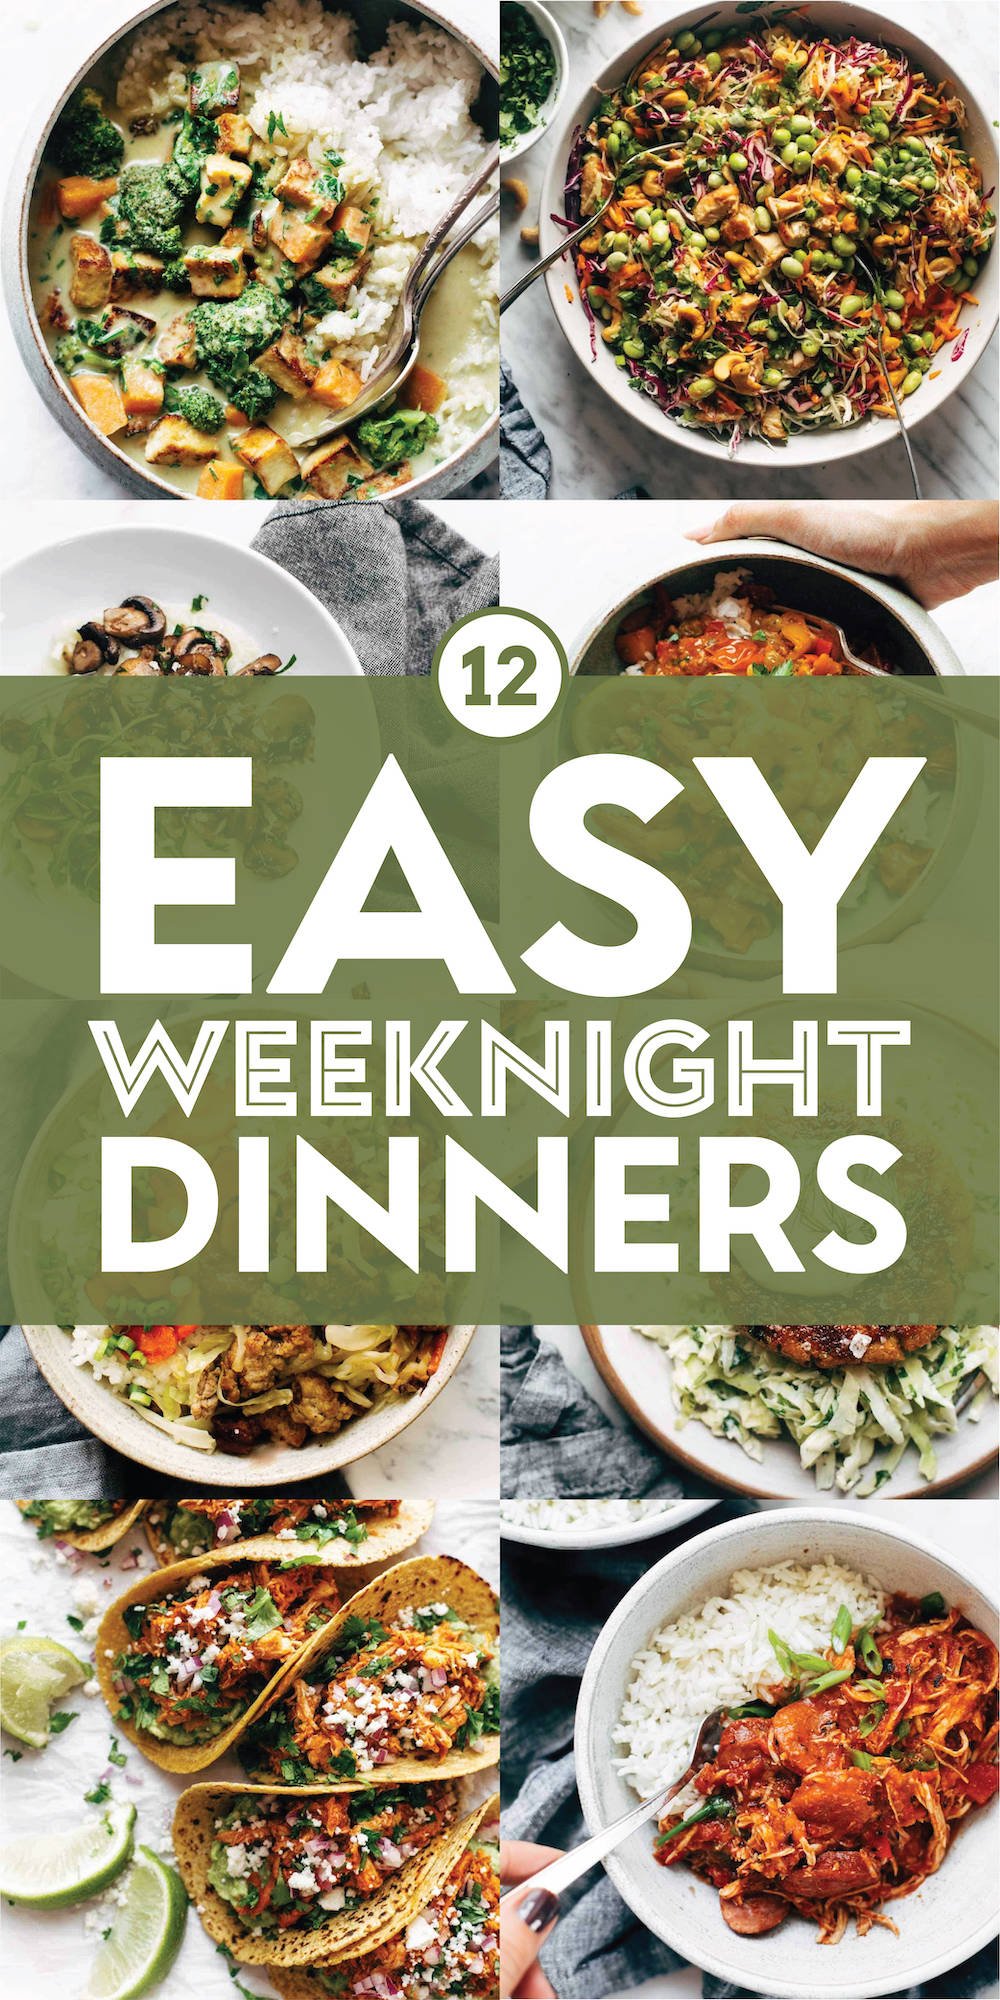 https://pinchofyum.com/wp-content/uploads/Easy-Weeknight-Dinners-Pin.jpg